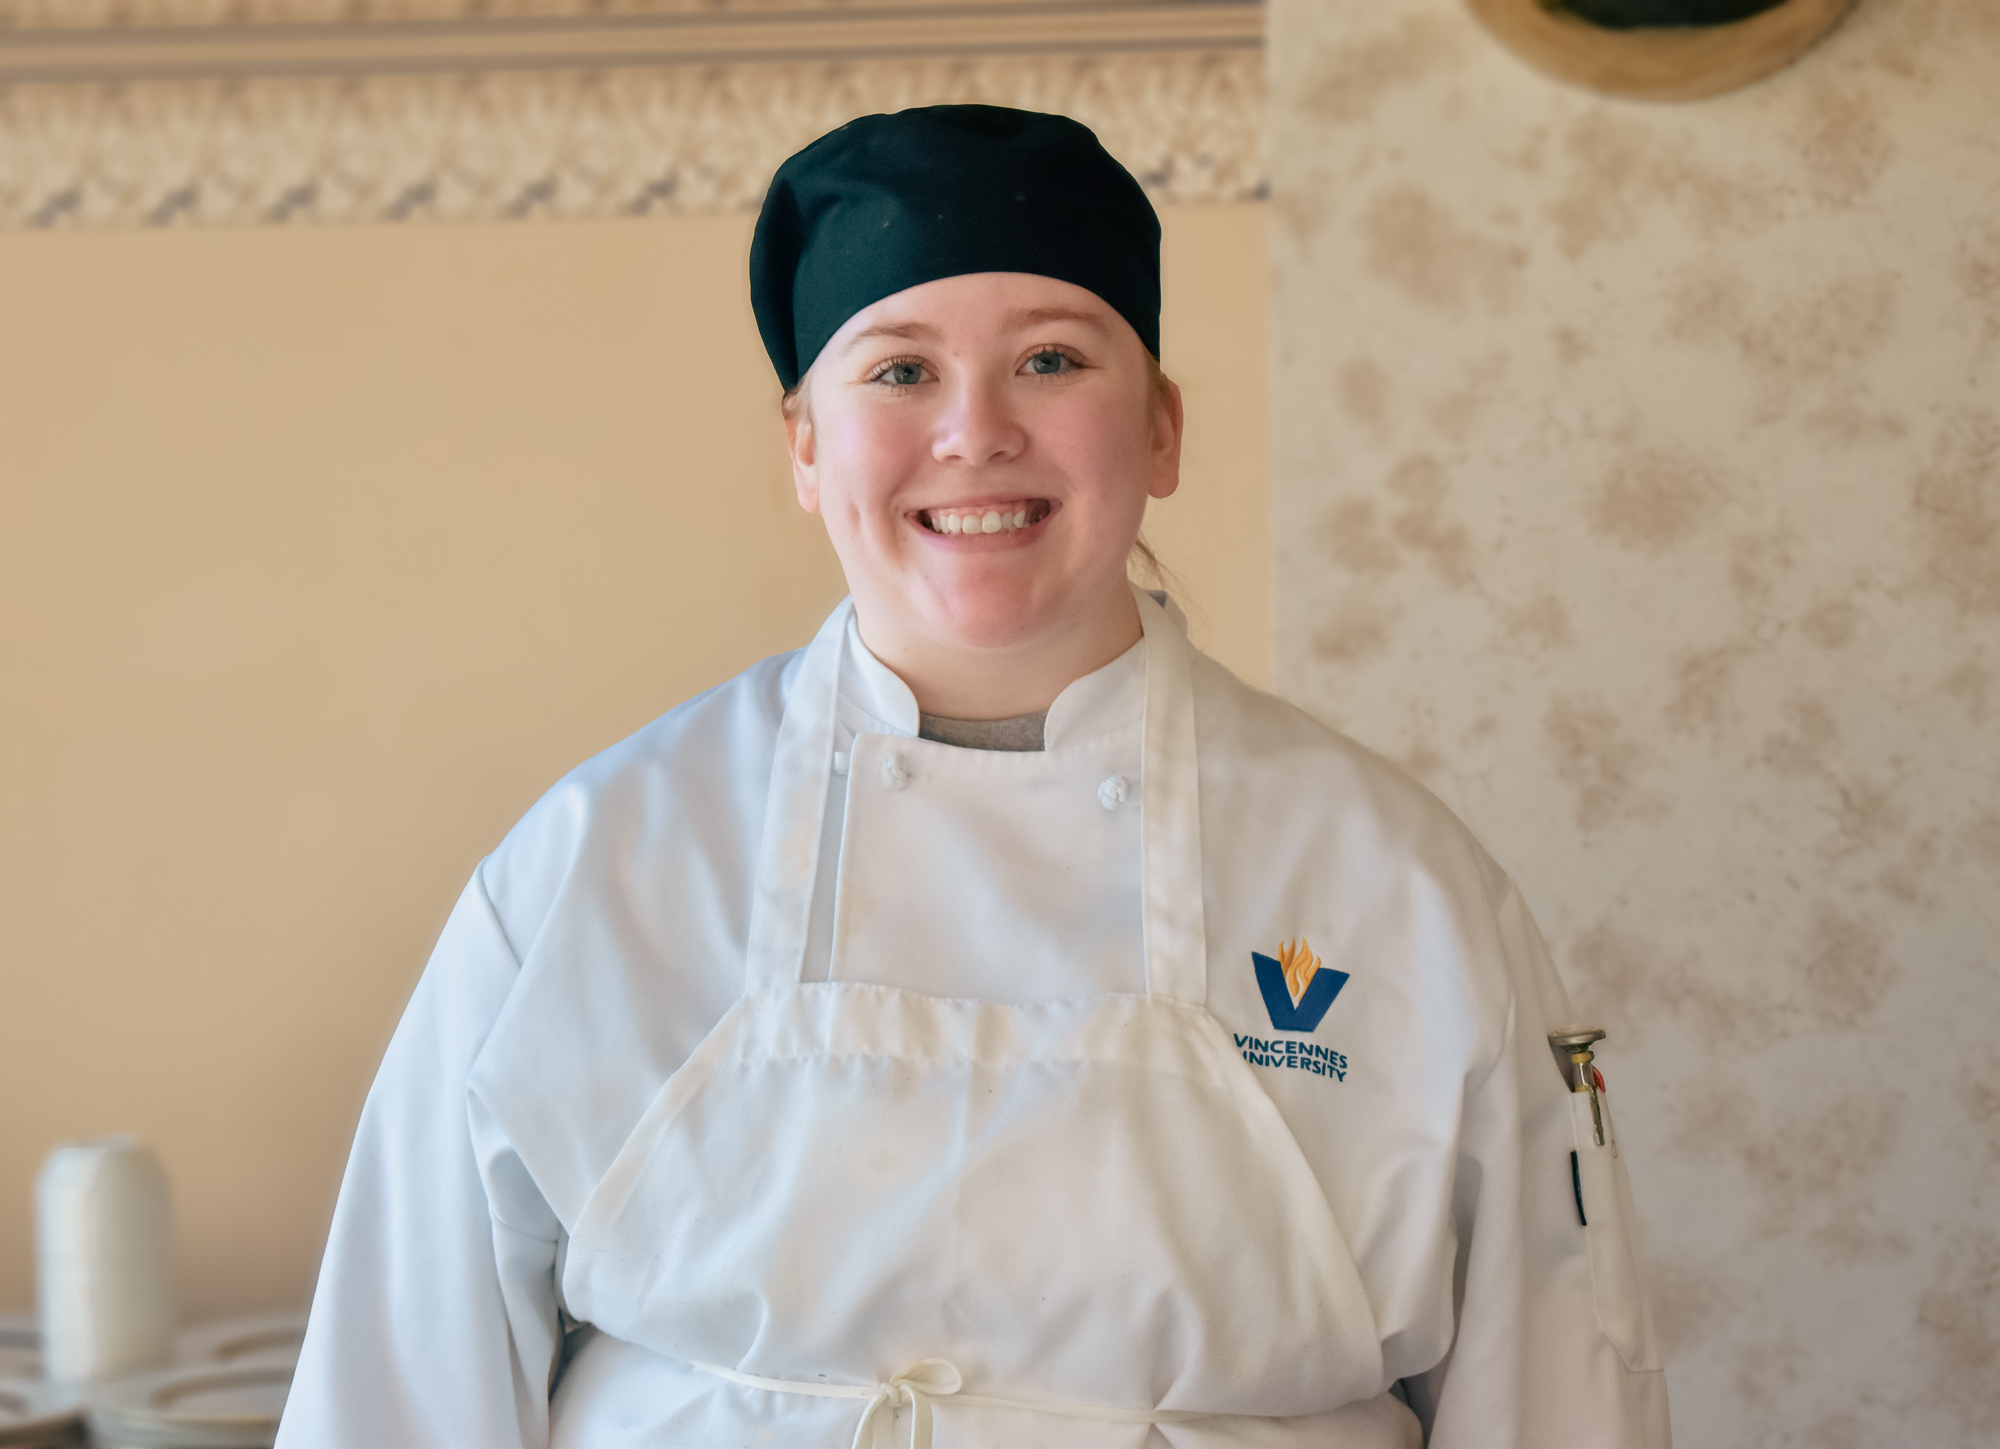 VU Culinary Arts Major Rachel Davis